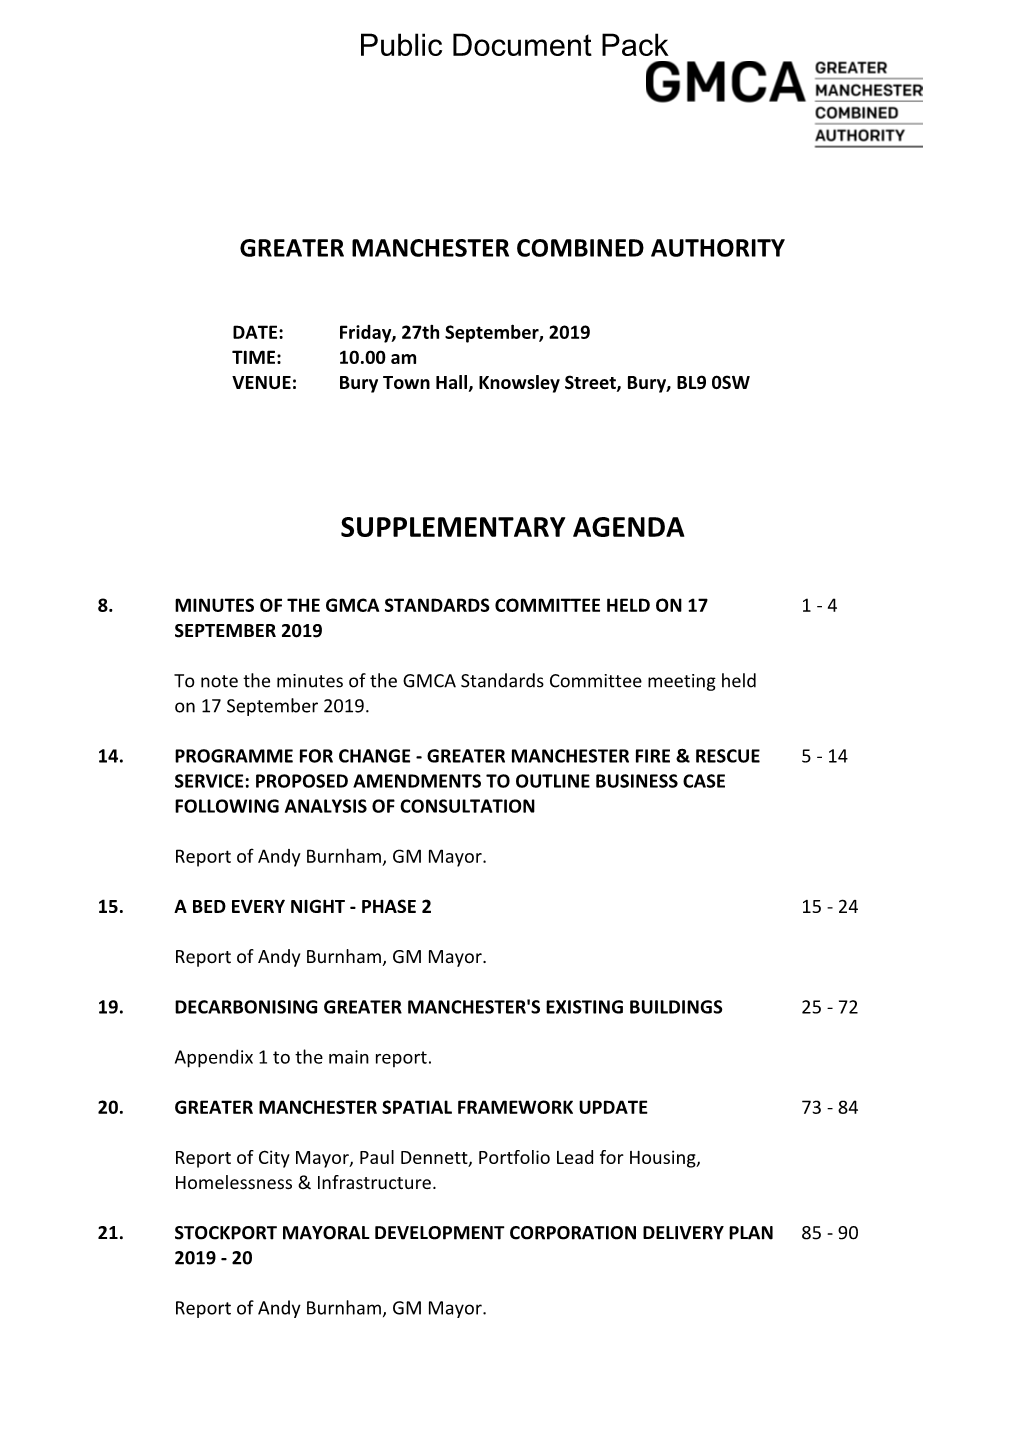 GMCA Greater Manchester Spatial Framework Update